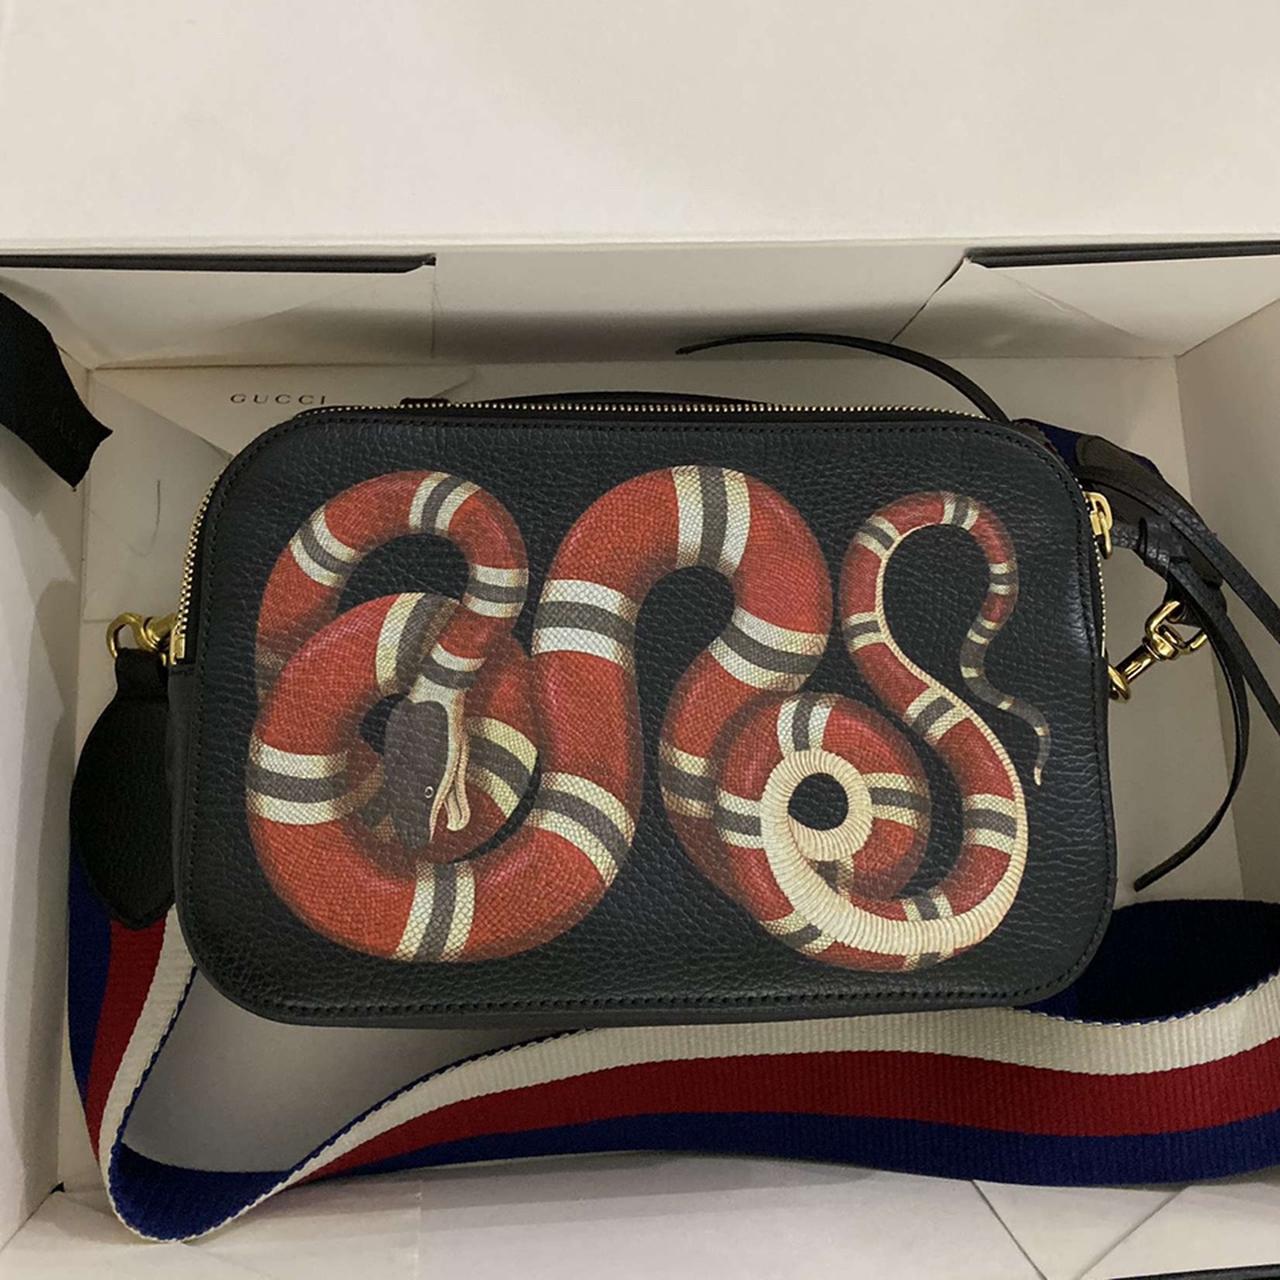 Gucci Snake Print Leather Top Handle Bag